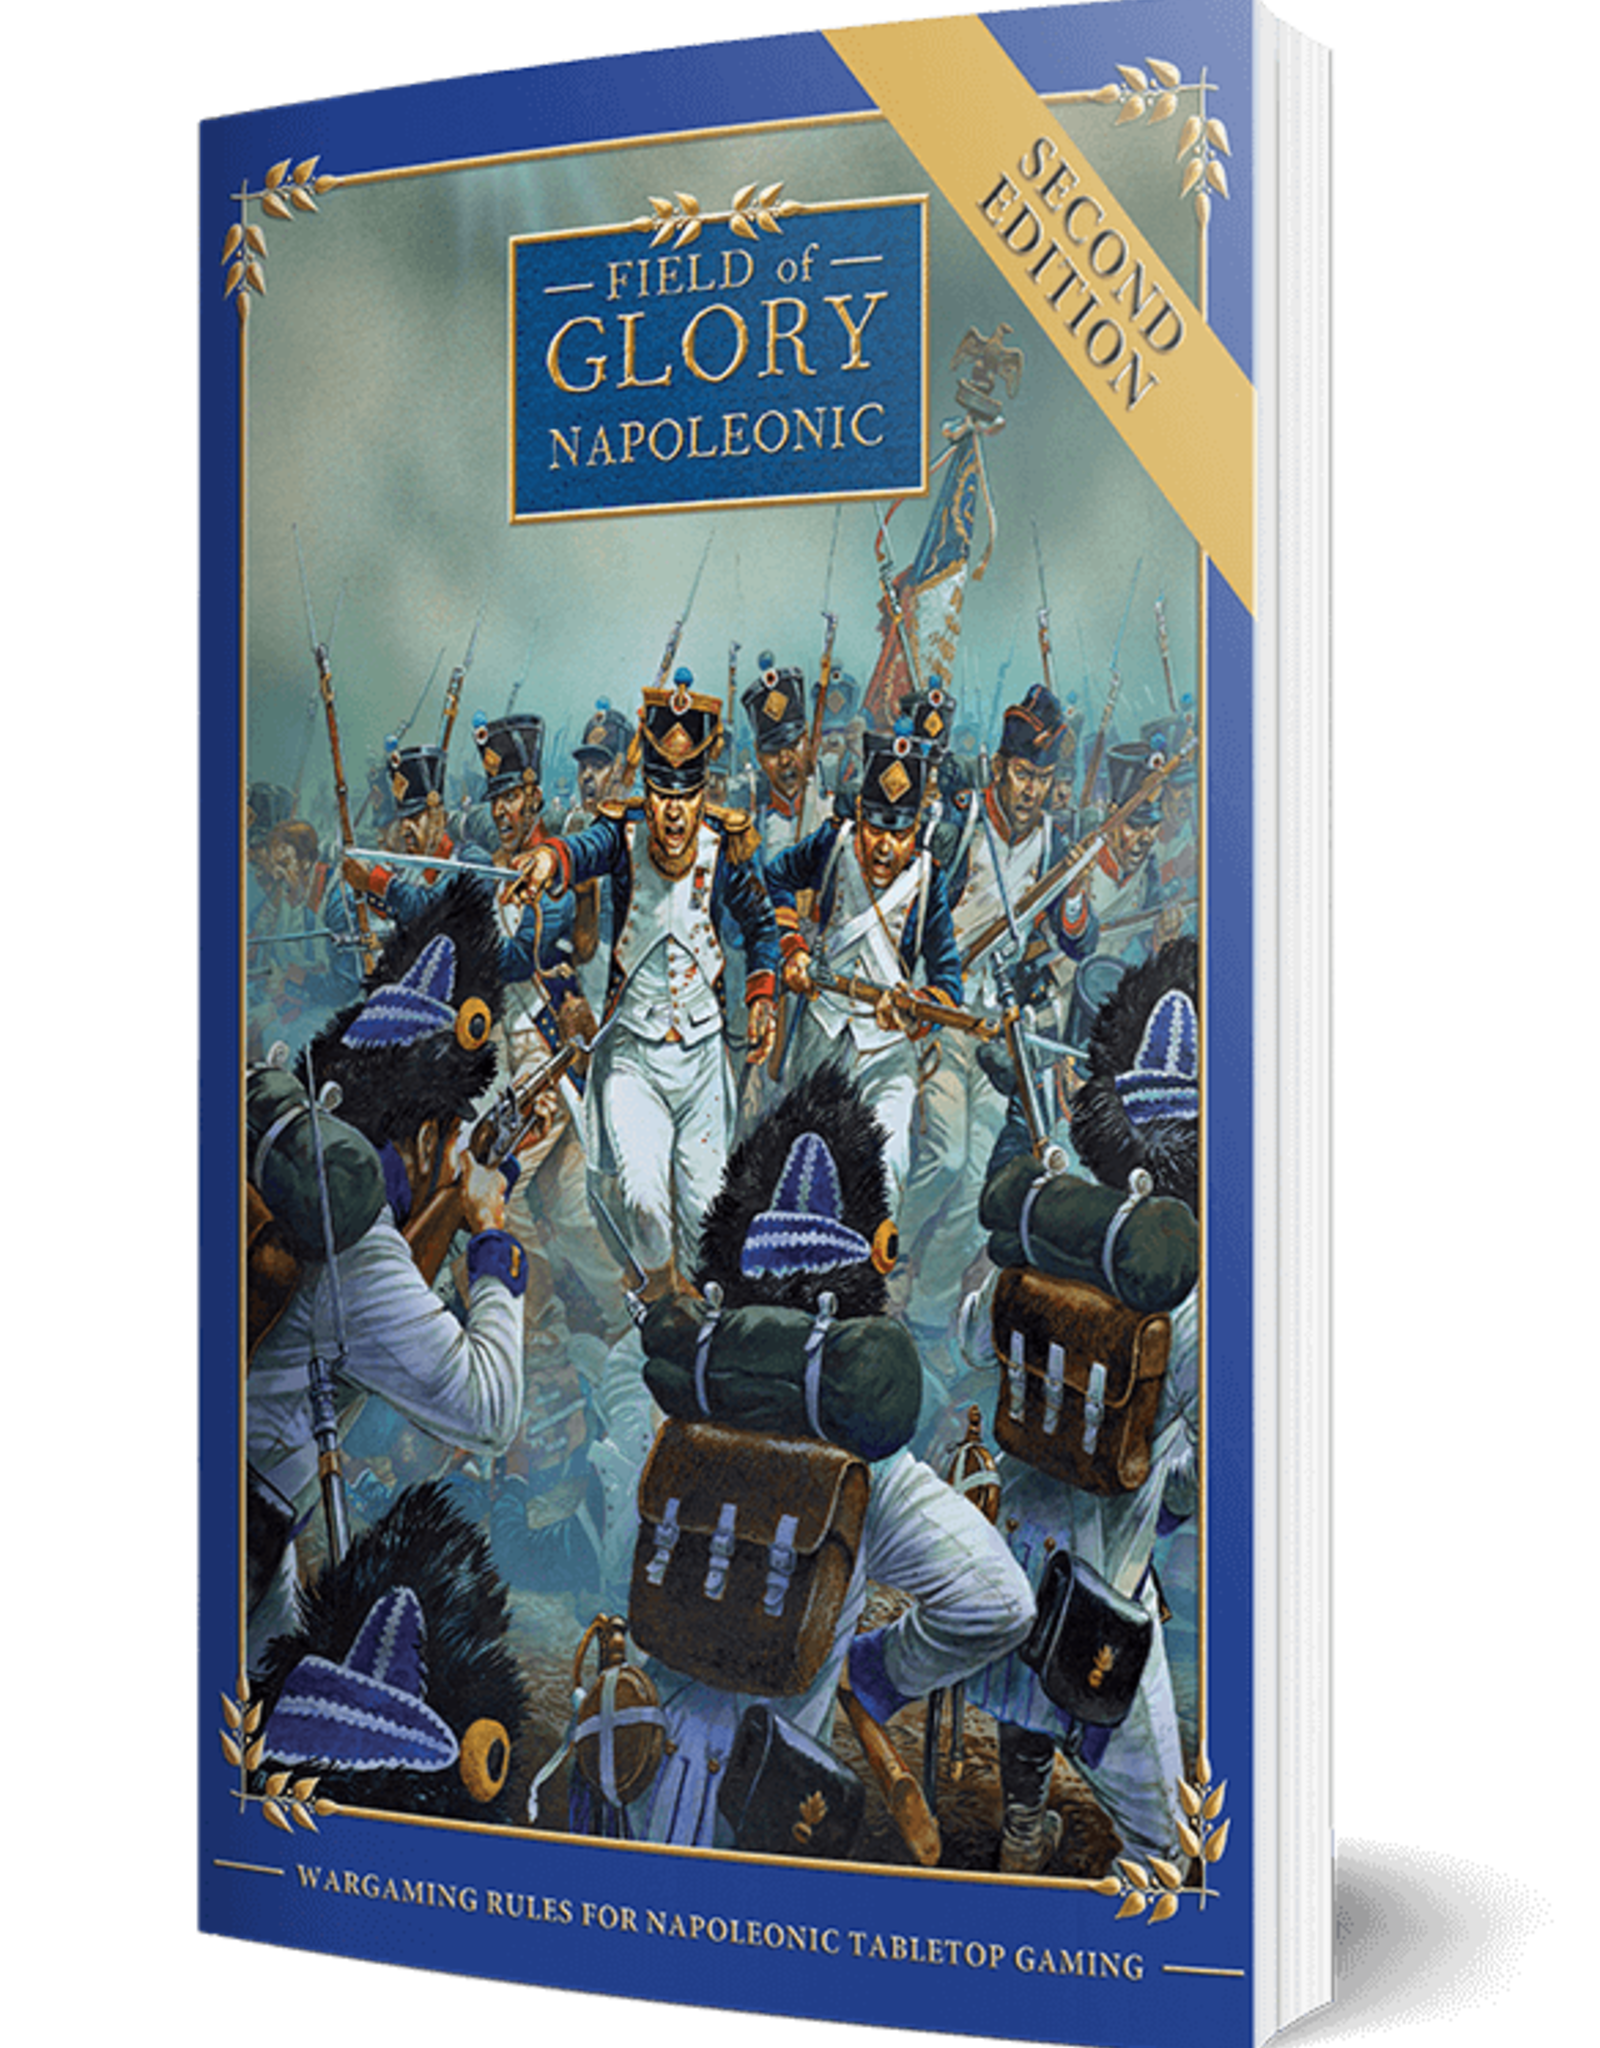 Field of Glory Napoleonic Field of Glory Napoleonic, 2nd Ed., Vol. I